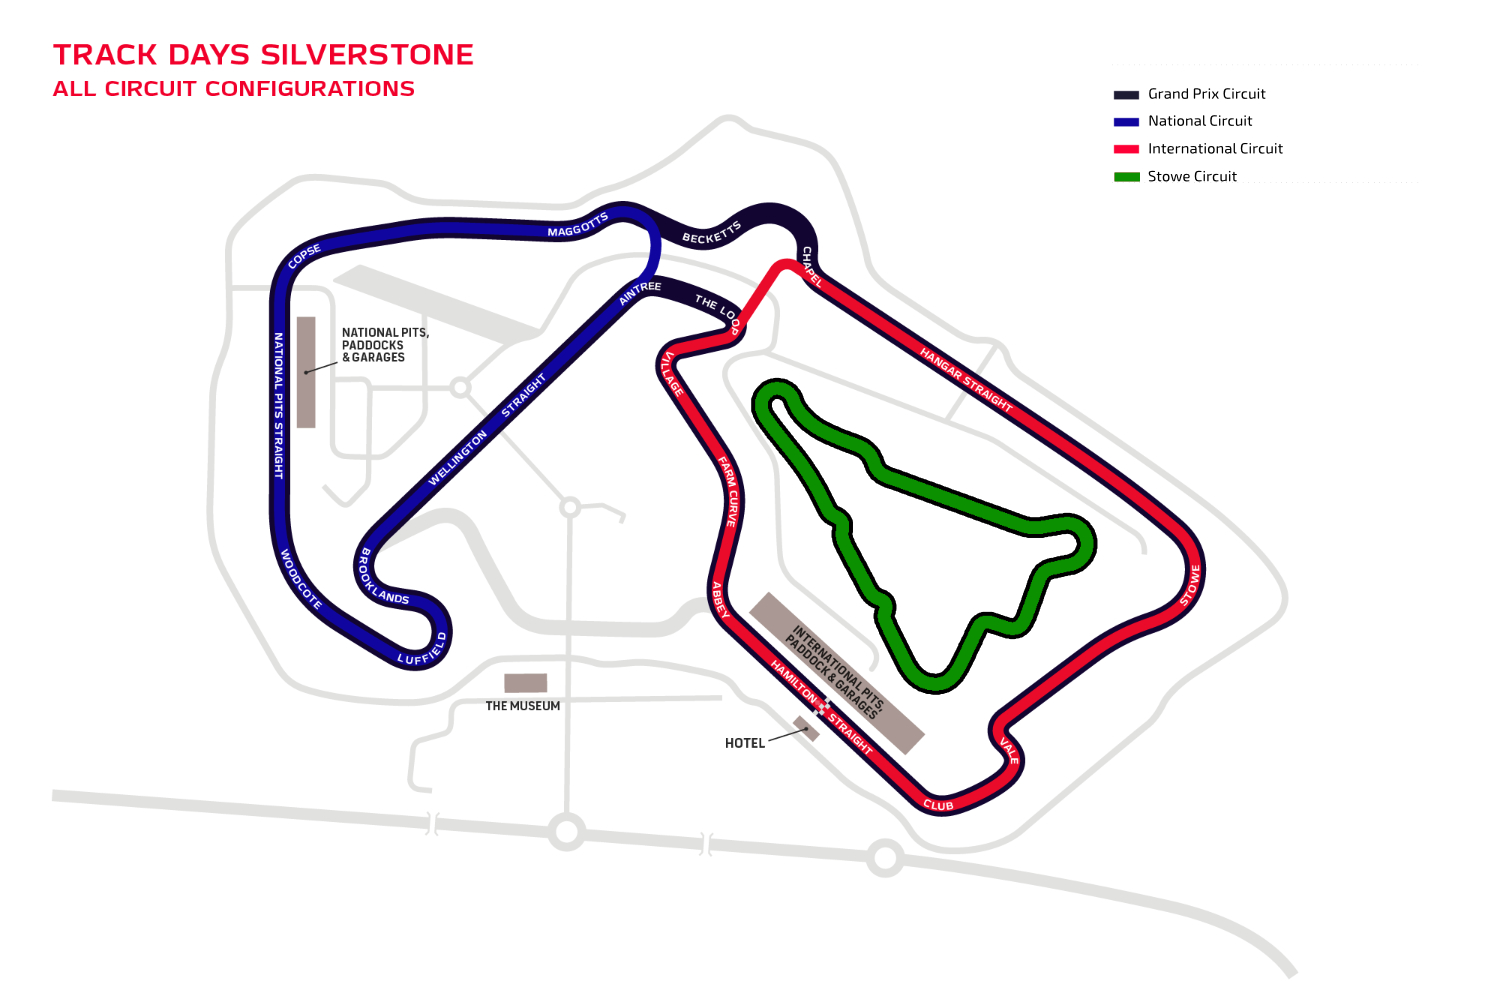 Silverstone Circuit Configurations